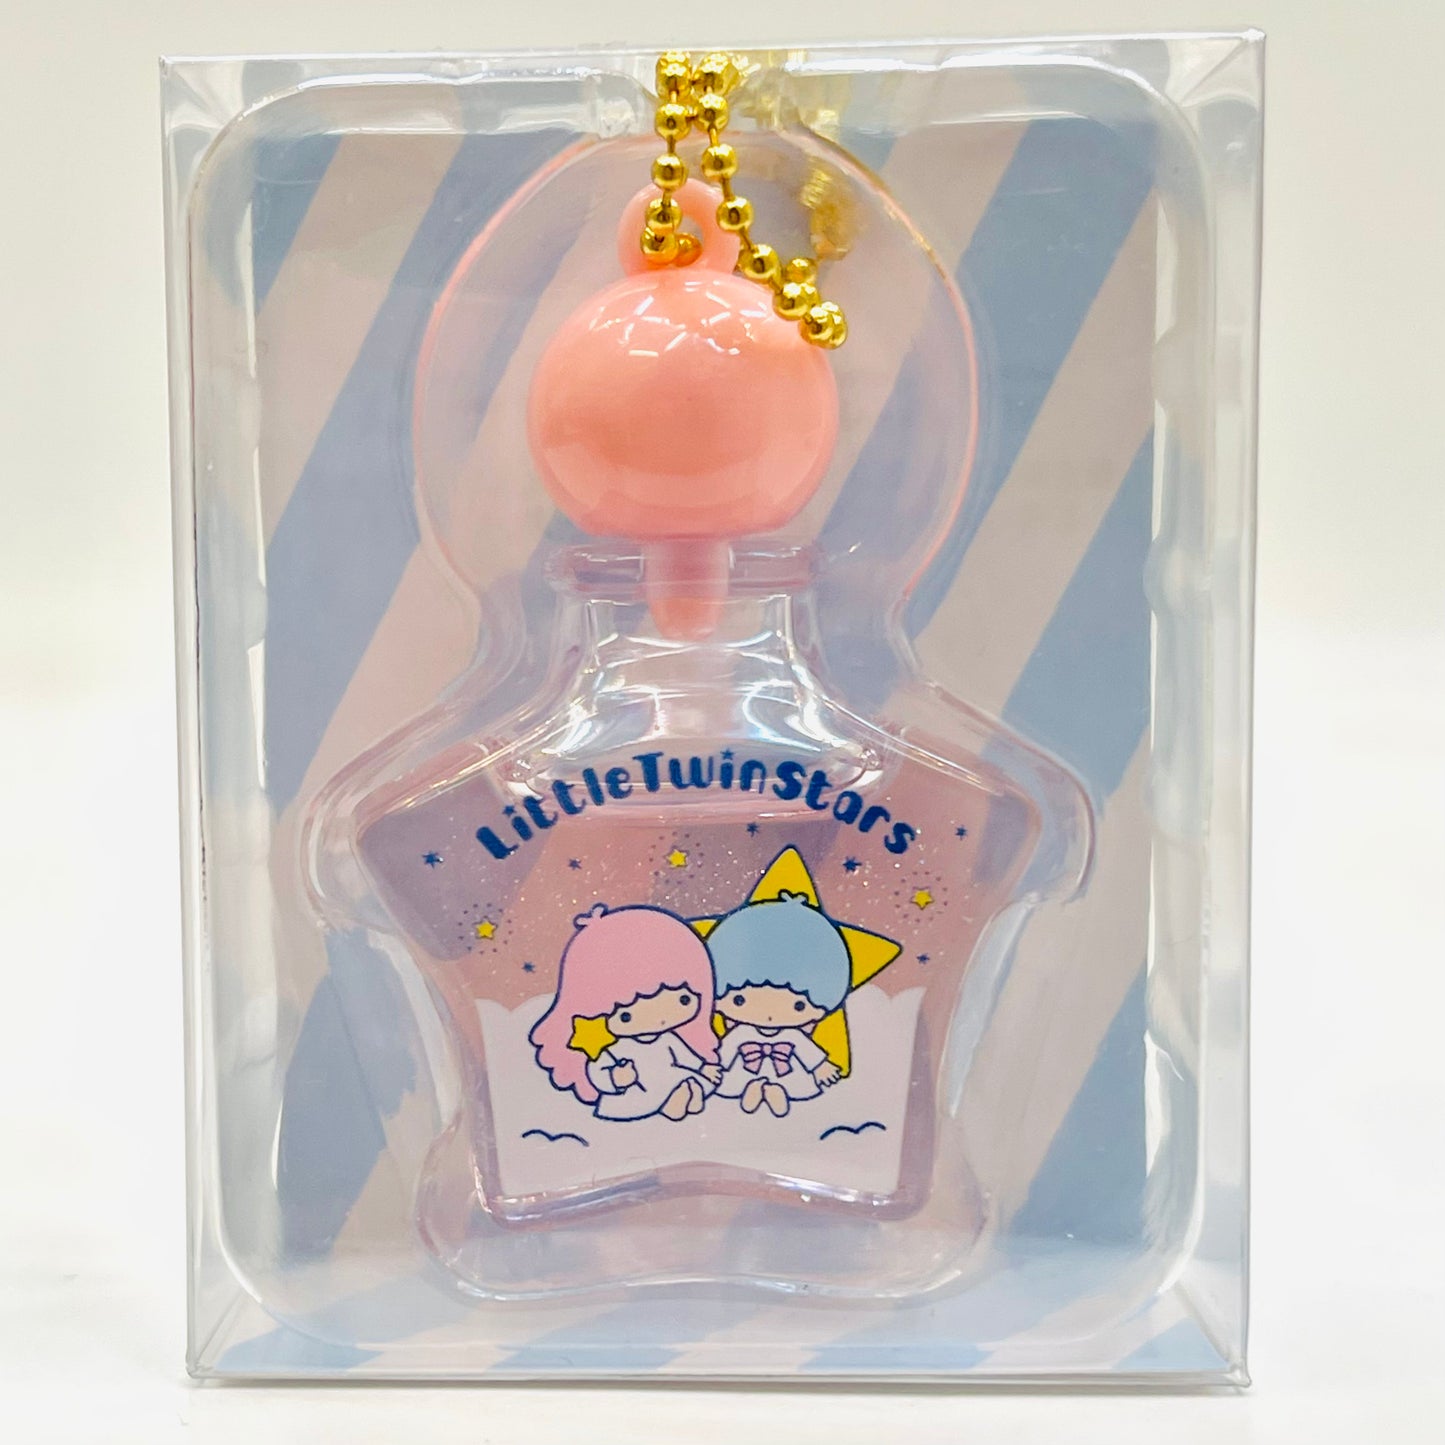 Sanrio Keychain with Bottle Mascot